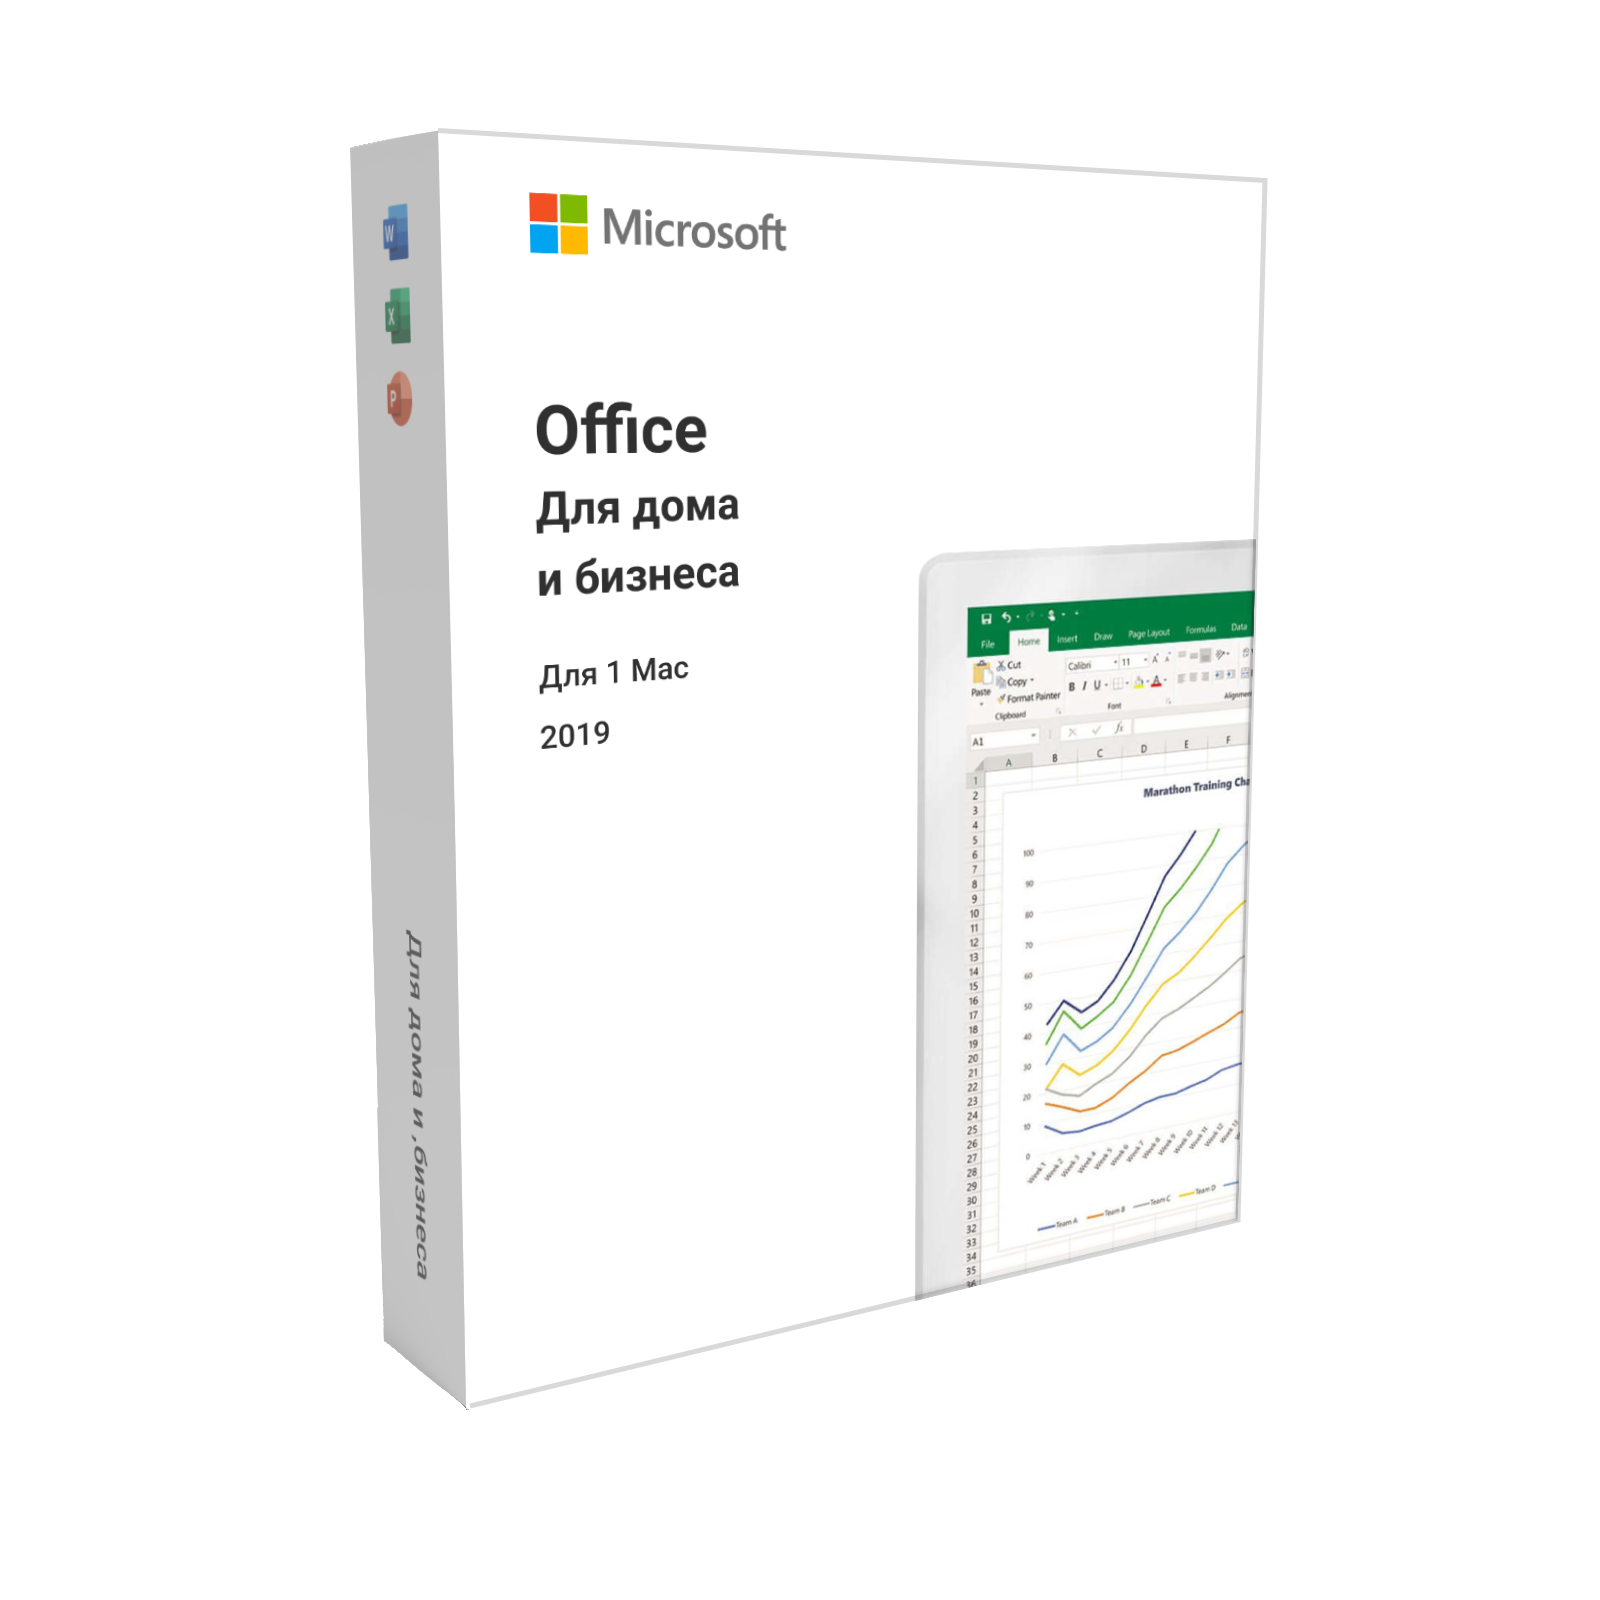 Office для телефона. Офисный пакет Microsoft Office Home and student 2021. Office для дома и бизнеса. Office для дома и бизнеса 2019. Майкрософт офис 2019.